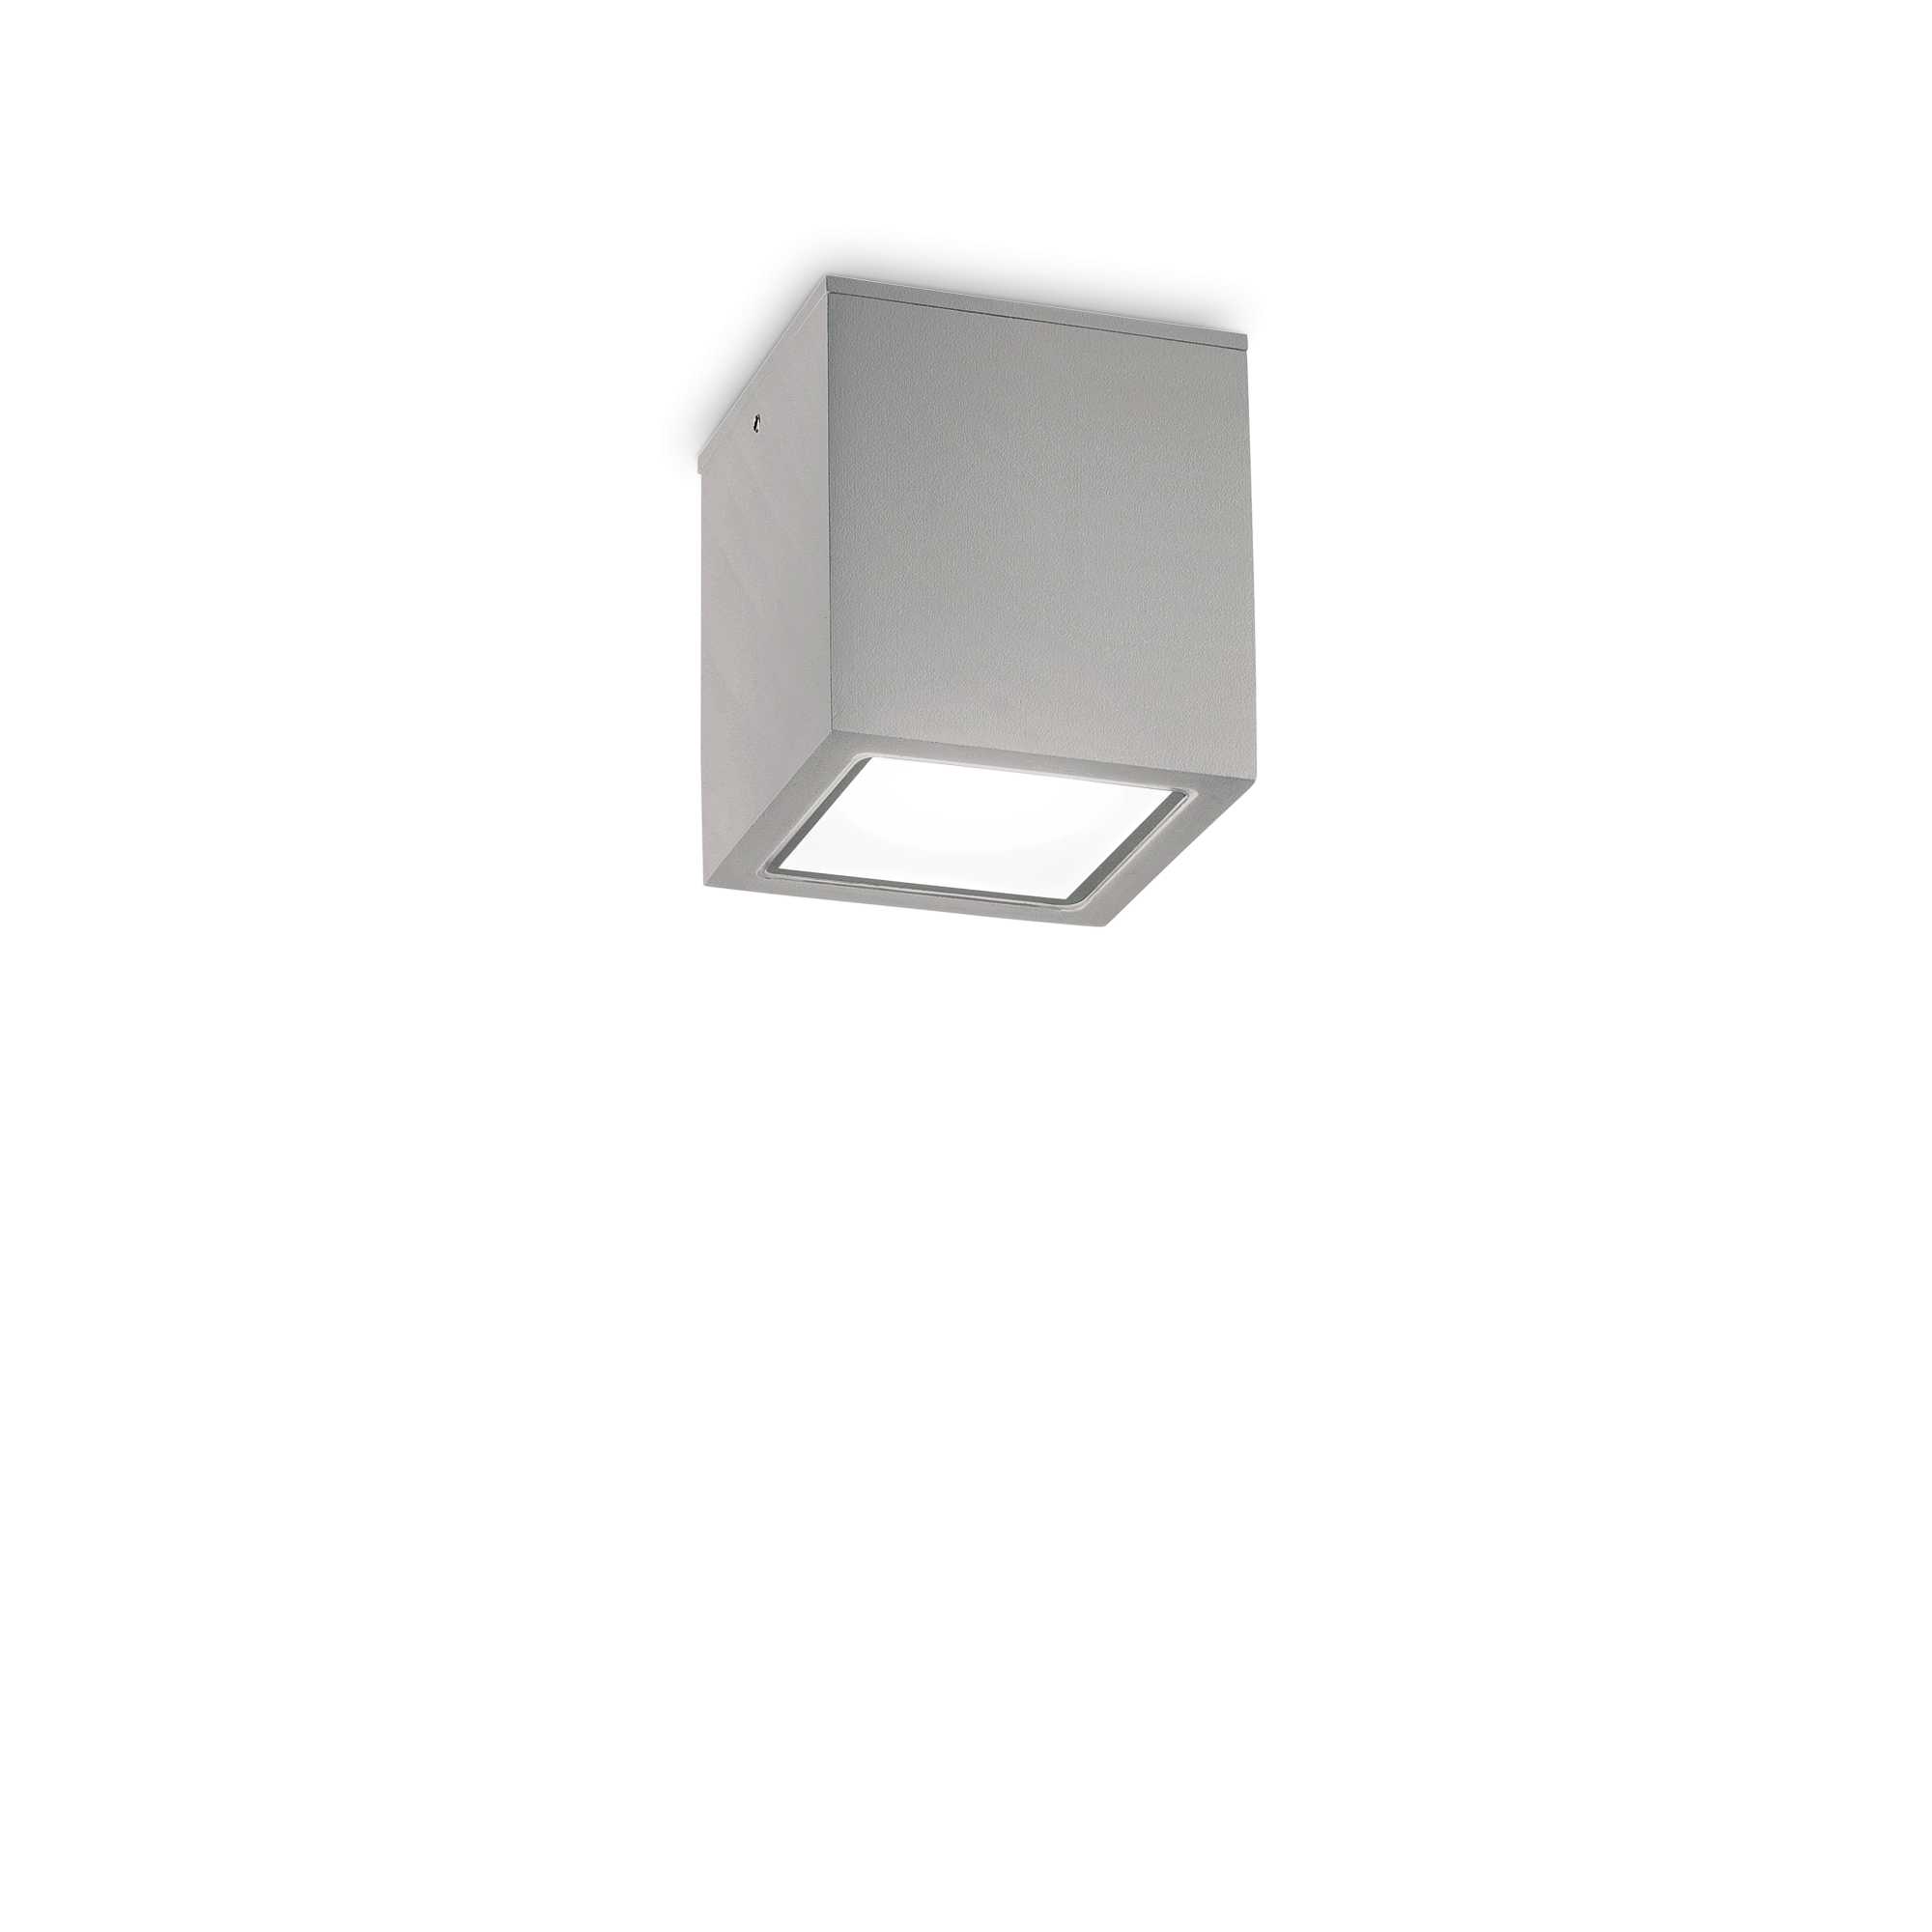 AD hotelska oprema Vanjska stropna lampa Techo pl1 mala- Sive boje slika proizvoda